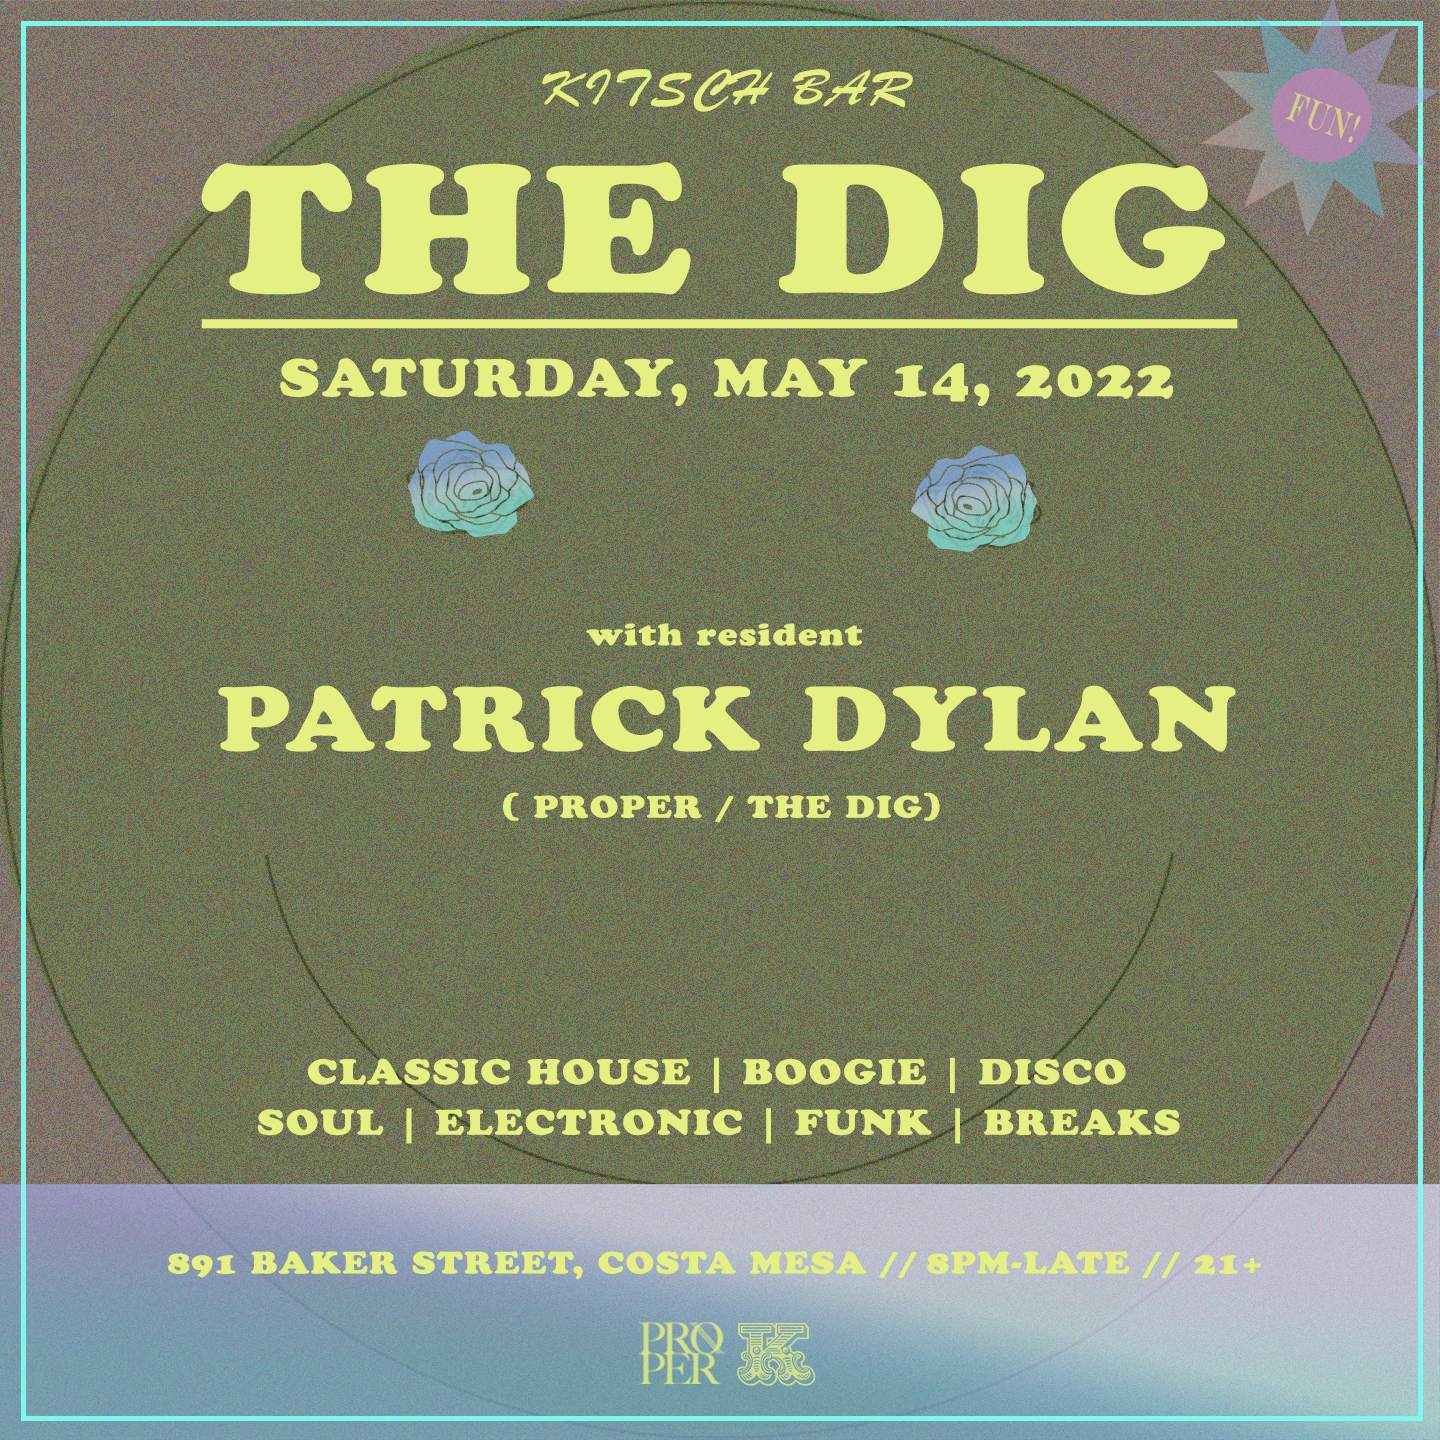 THE DIG - Patrick Dylan - Página frontal